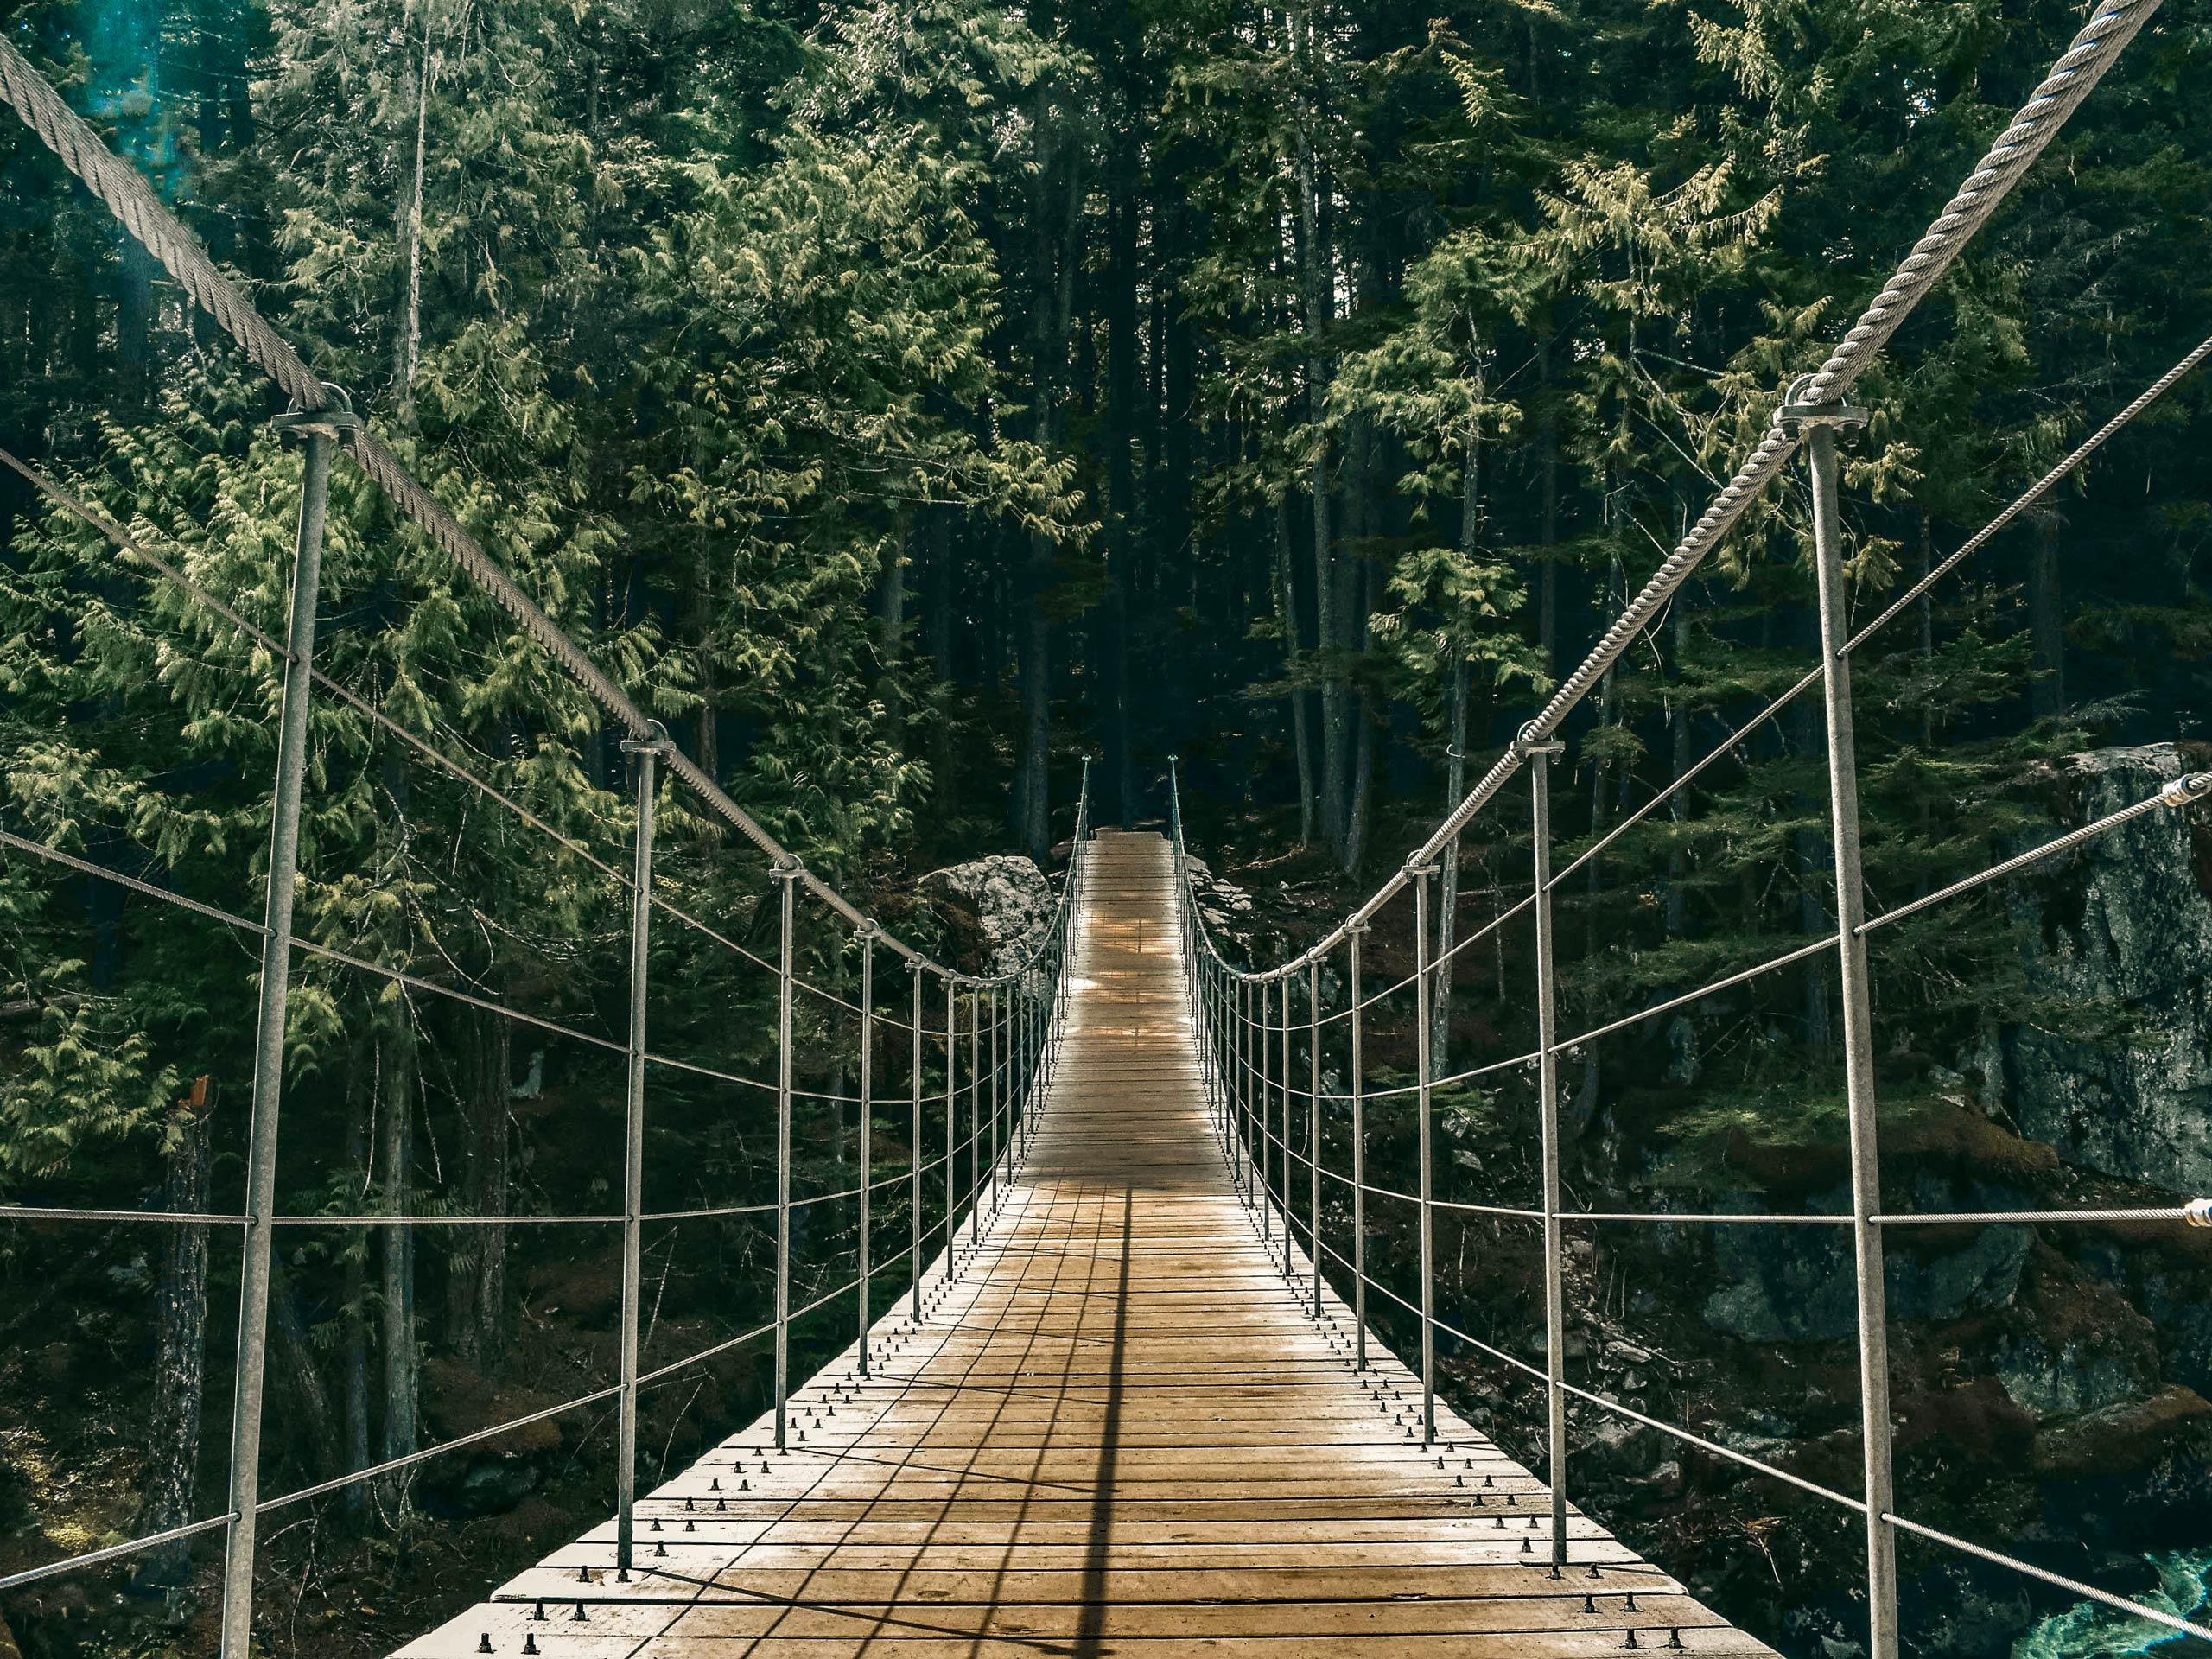 Suspension Bridge in the forest hiking Cheakamus River Trail